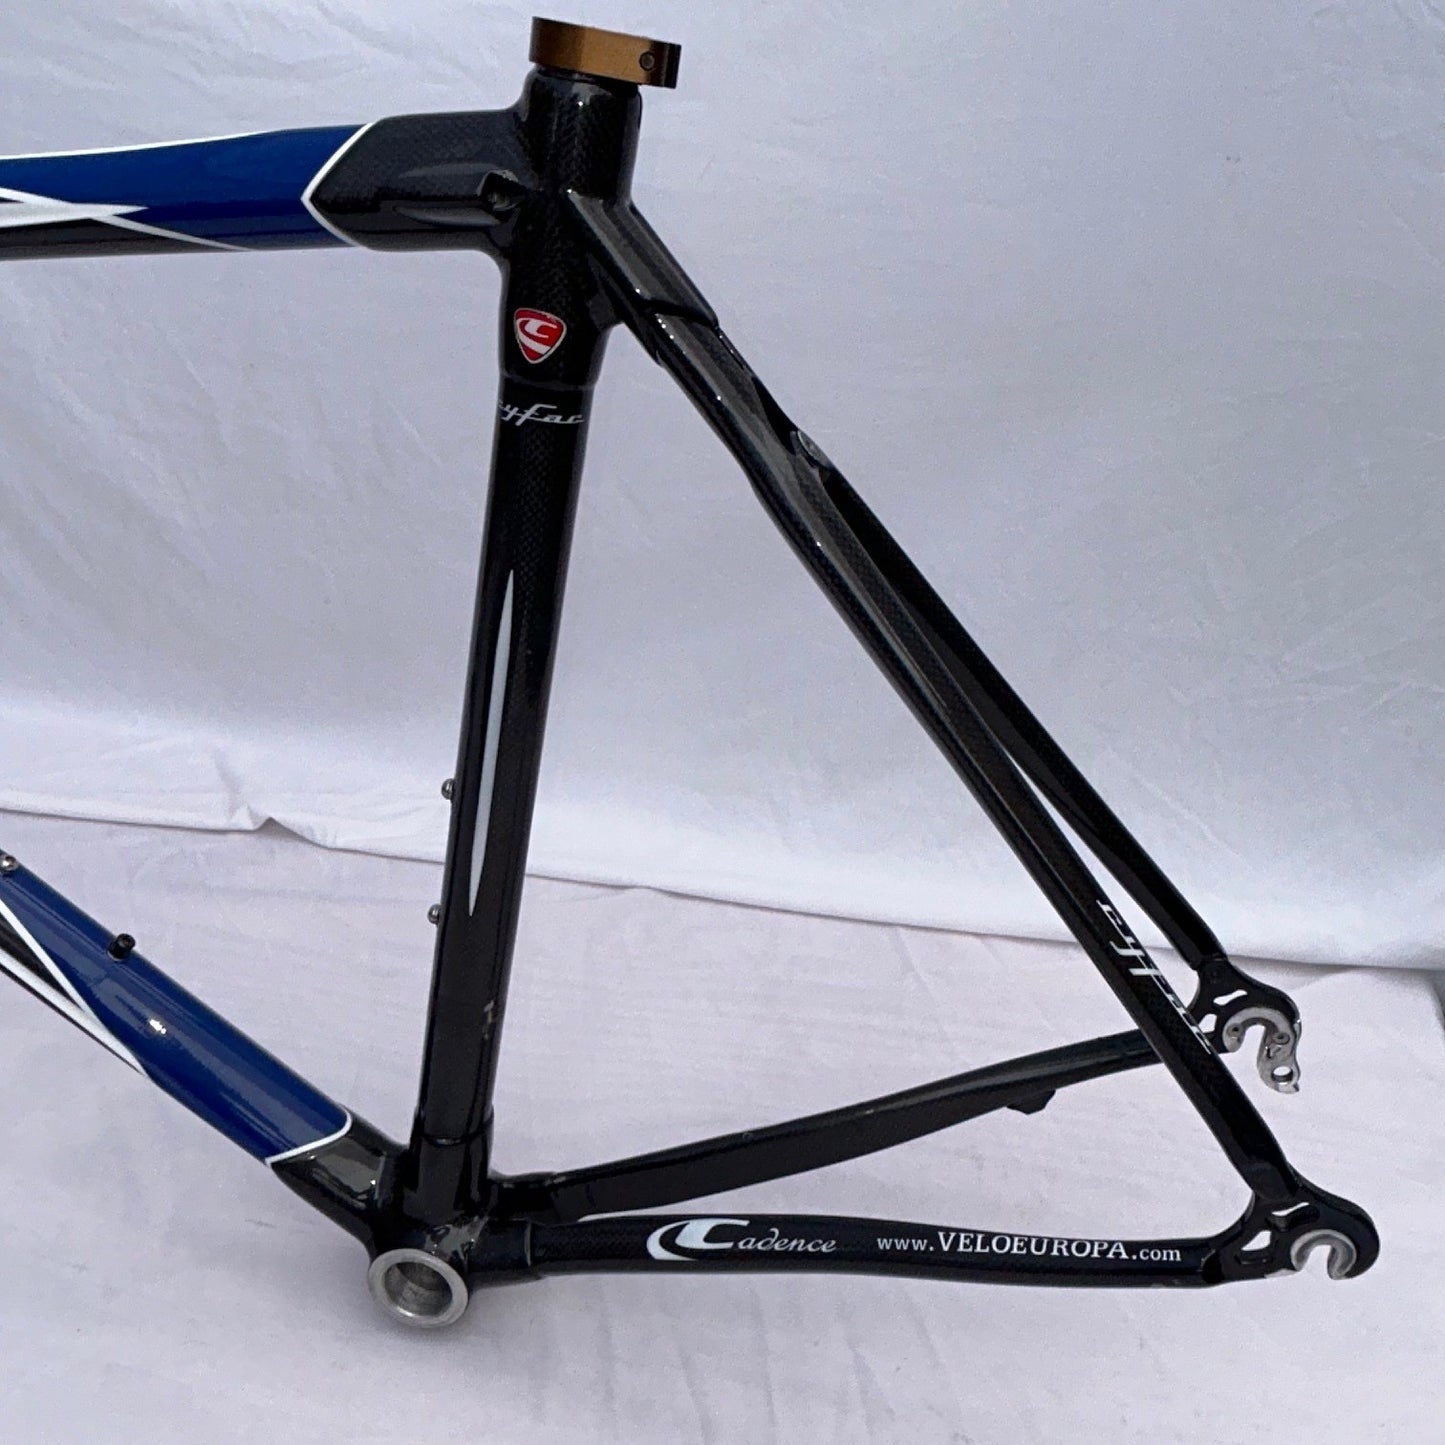 Cyfac Cadence Carbon Road Bike Frameset 56 cm with top tube 55 cm